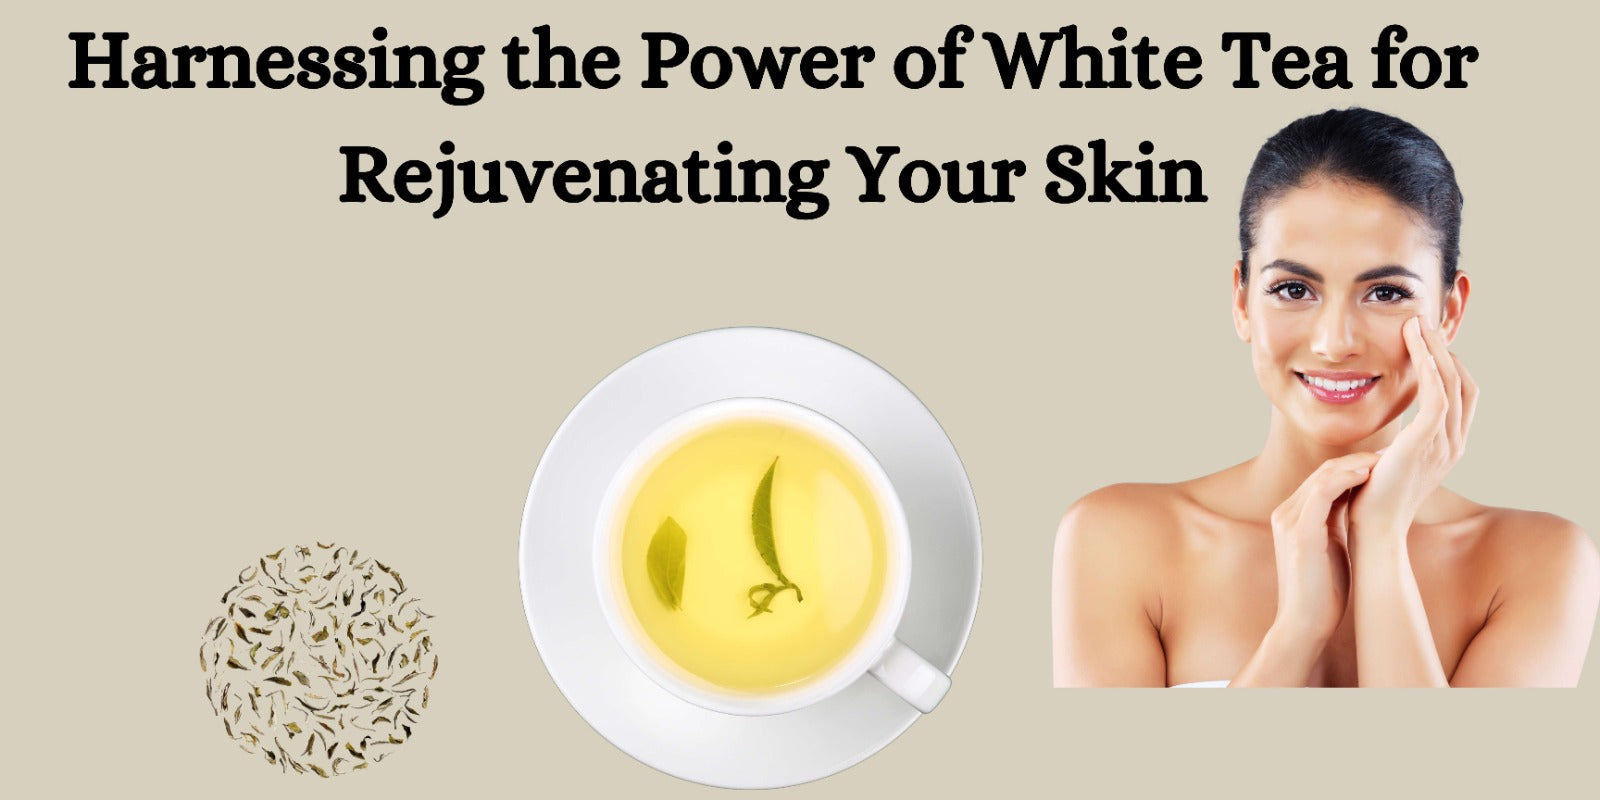 Harnessing the Power of White Tea for Rejuvenating Your Skin